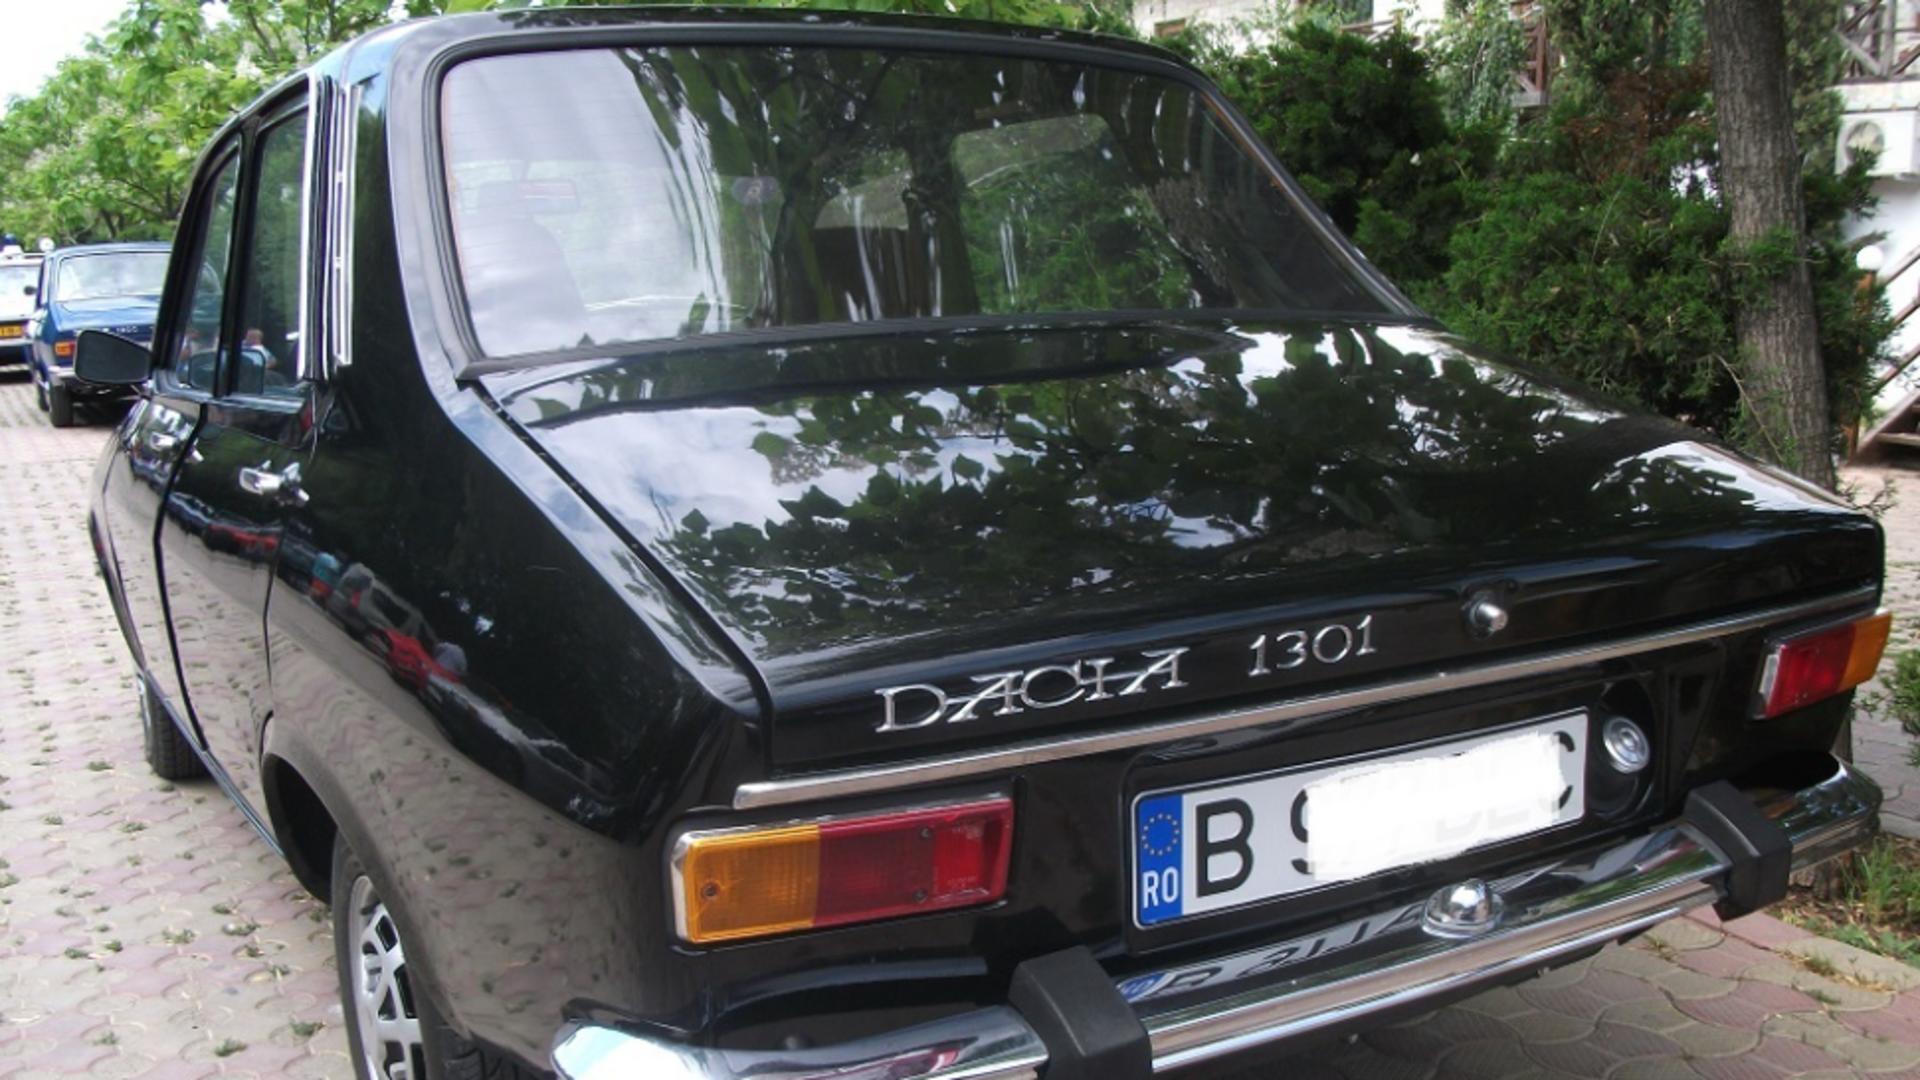 Dacia 1301 Lux "Securitate"